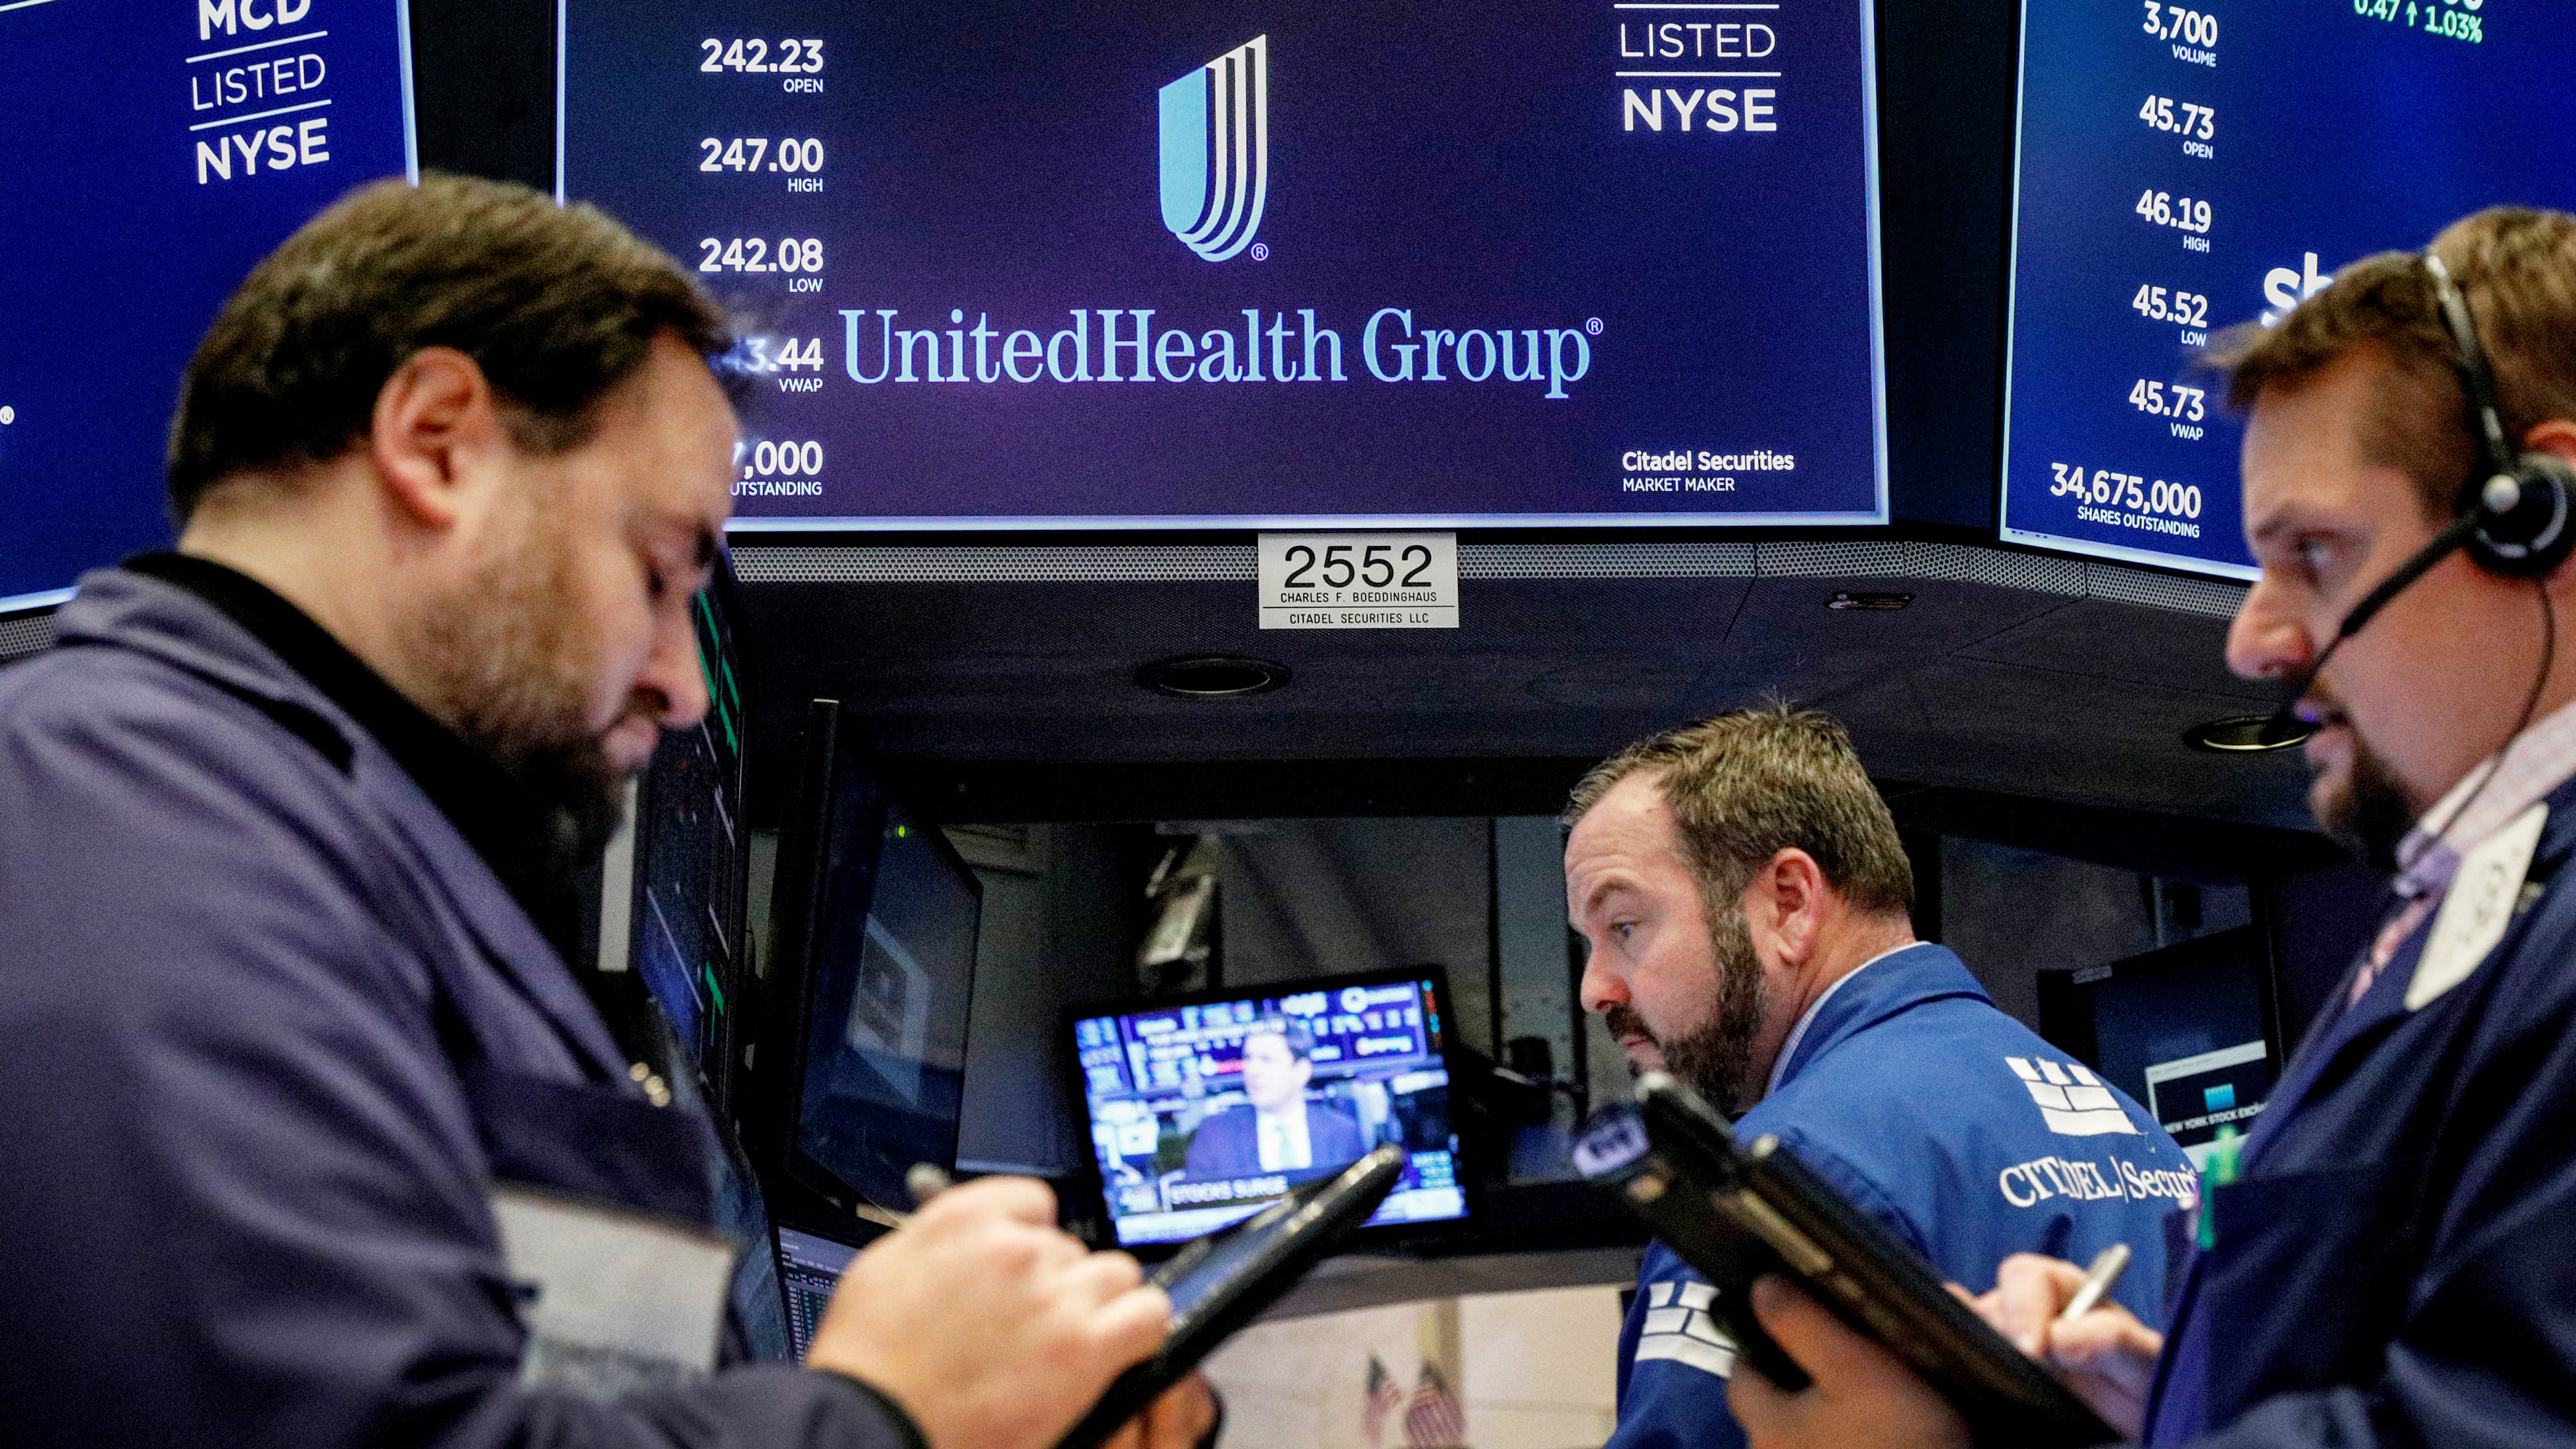 Healthcare stocks are returning, says Jim Cramer